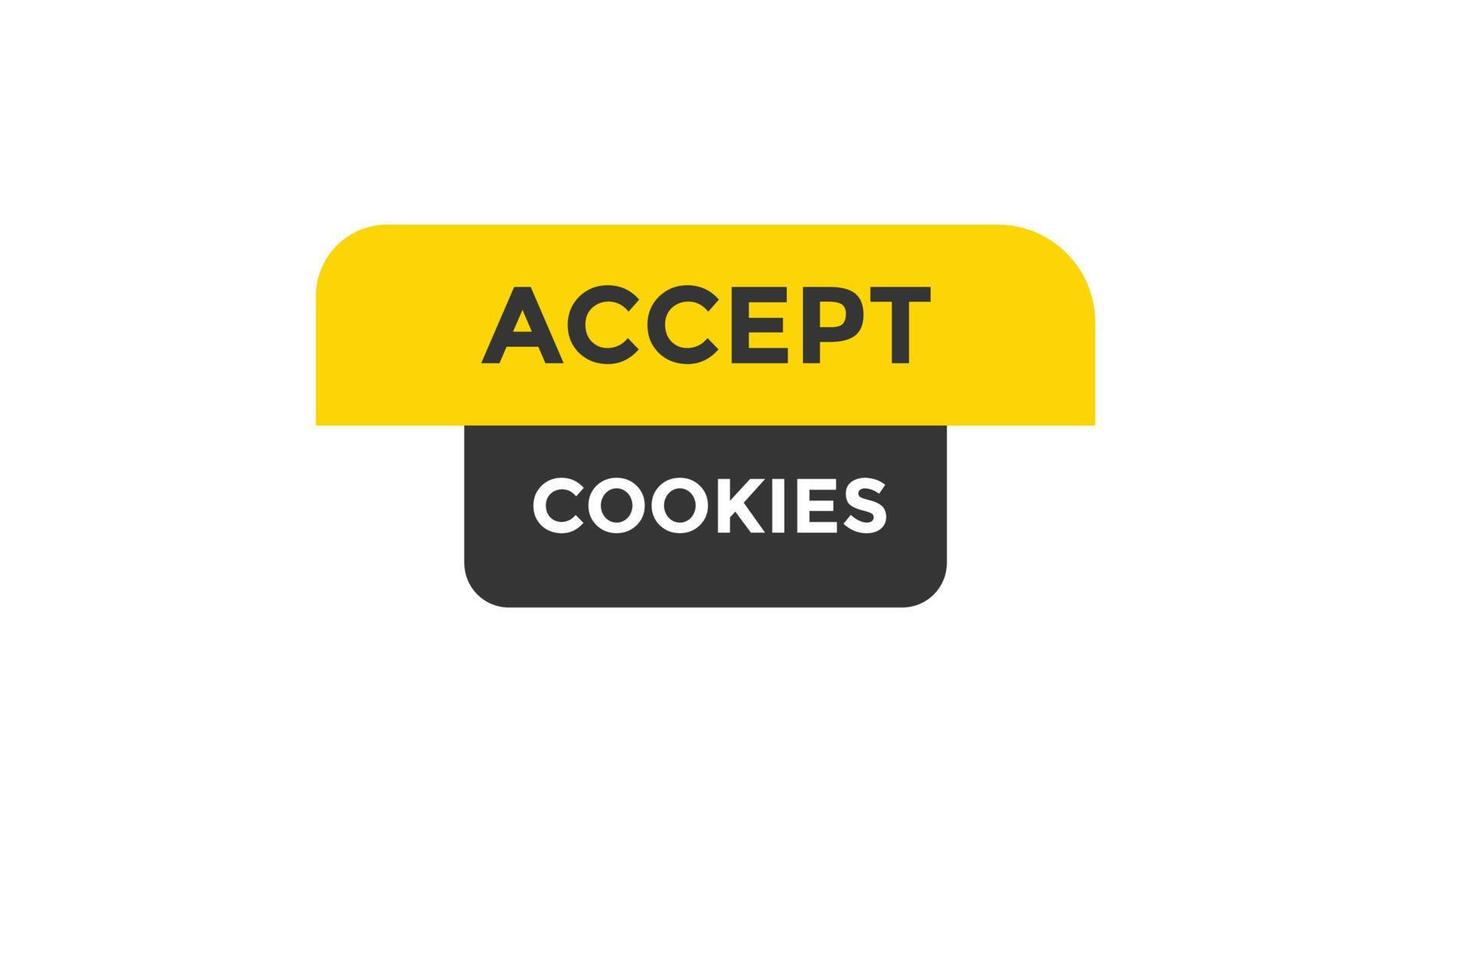 Accept cookies button web banner templates. Vector Illustration